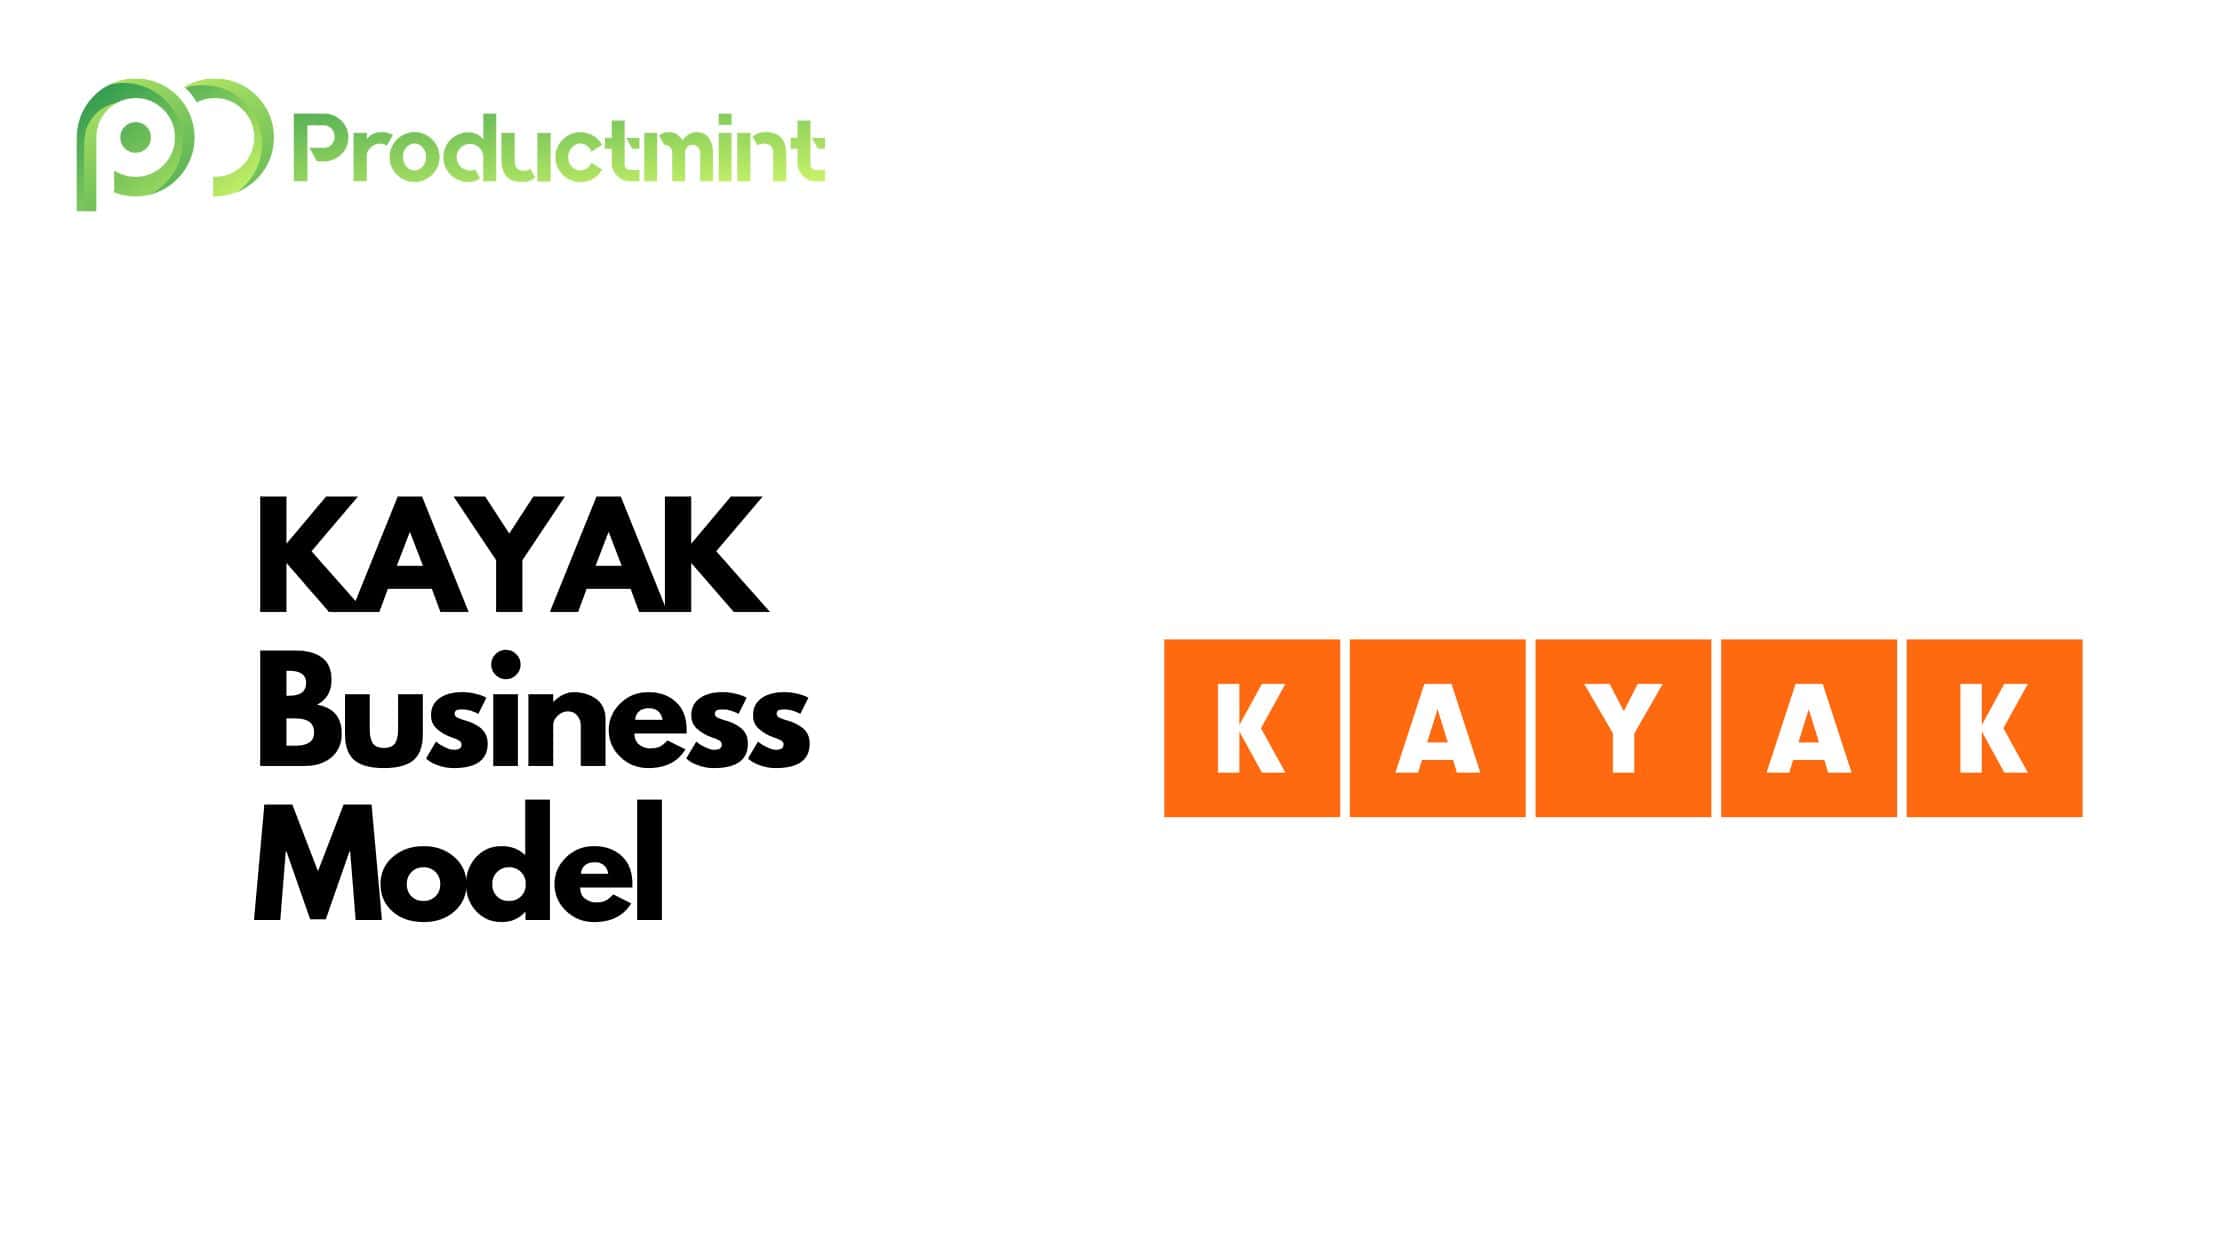 KAYAK Business Model